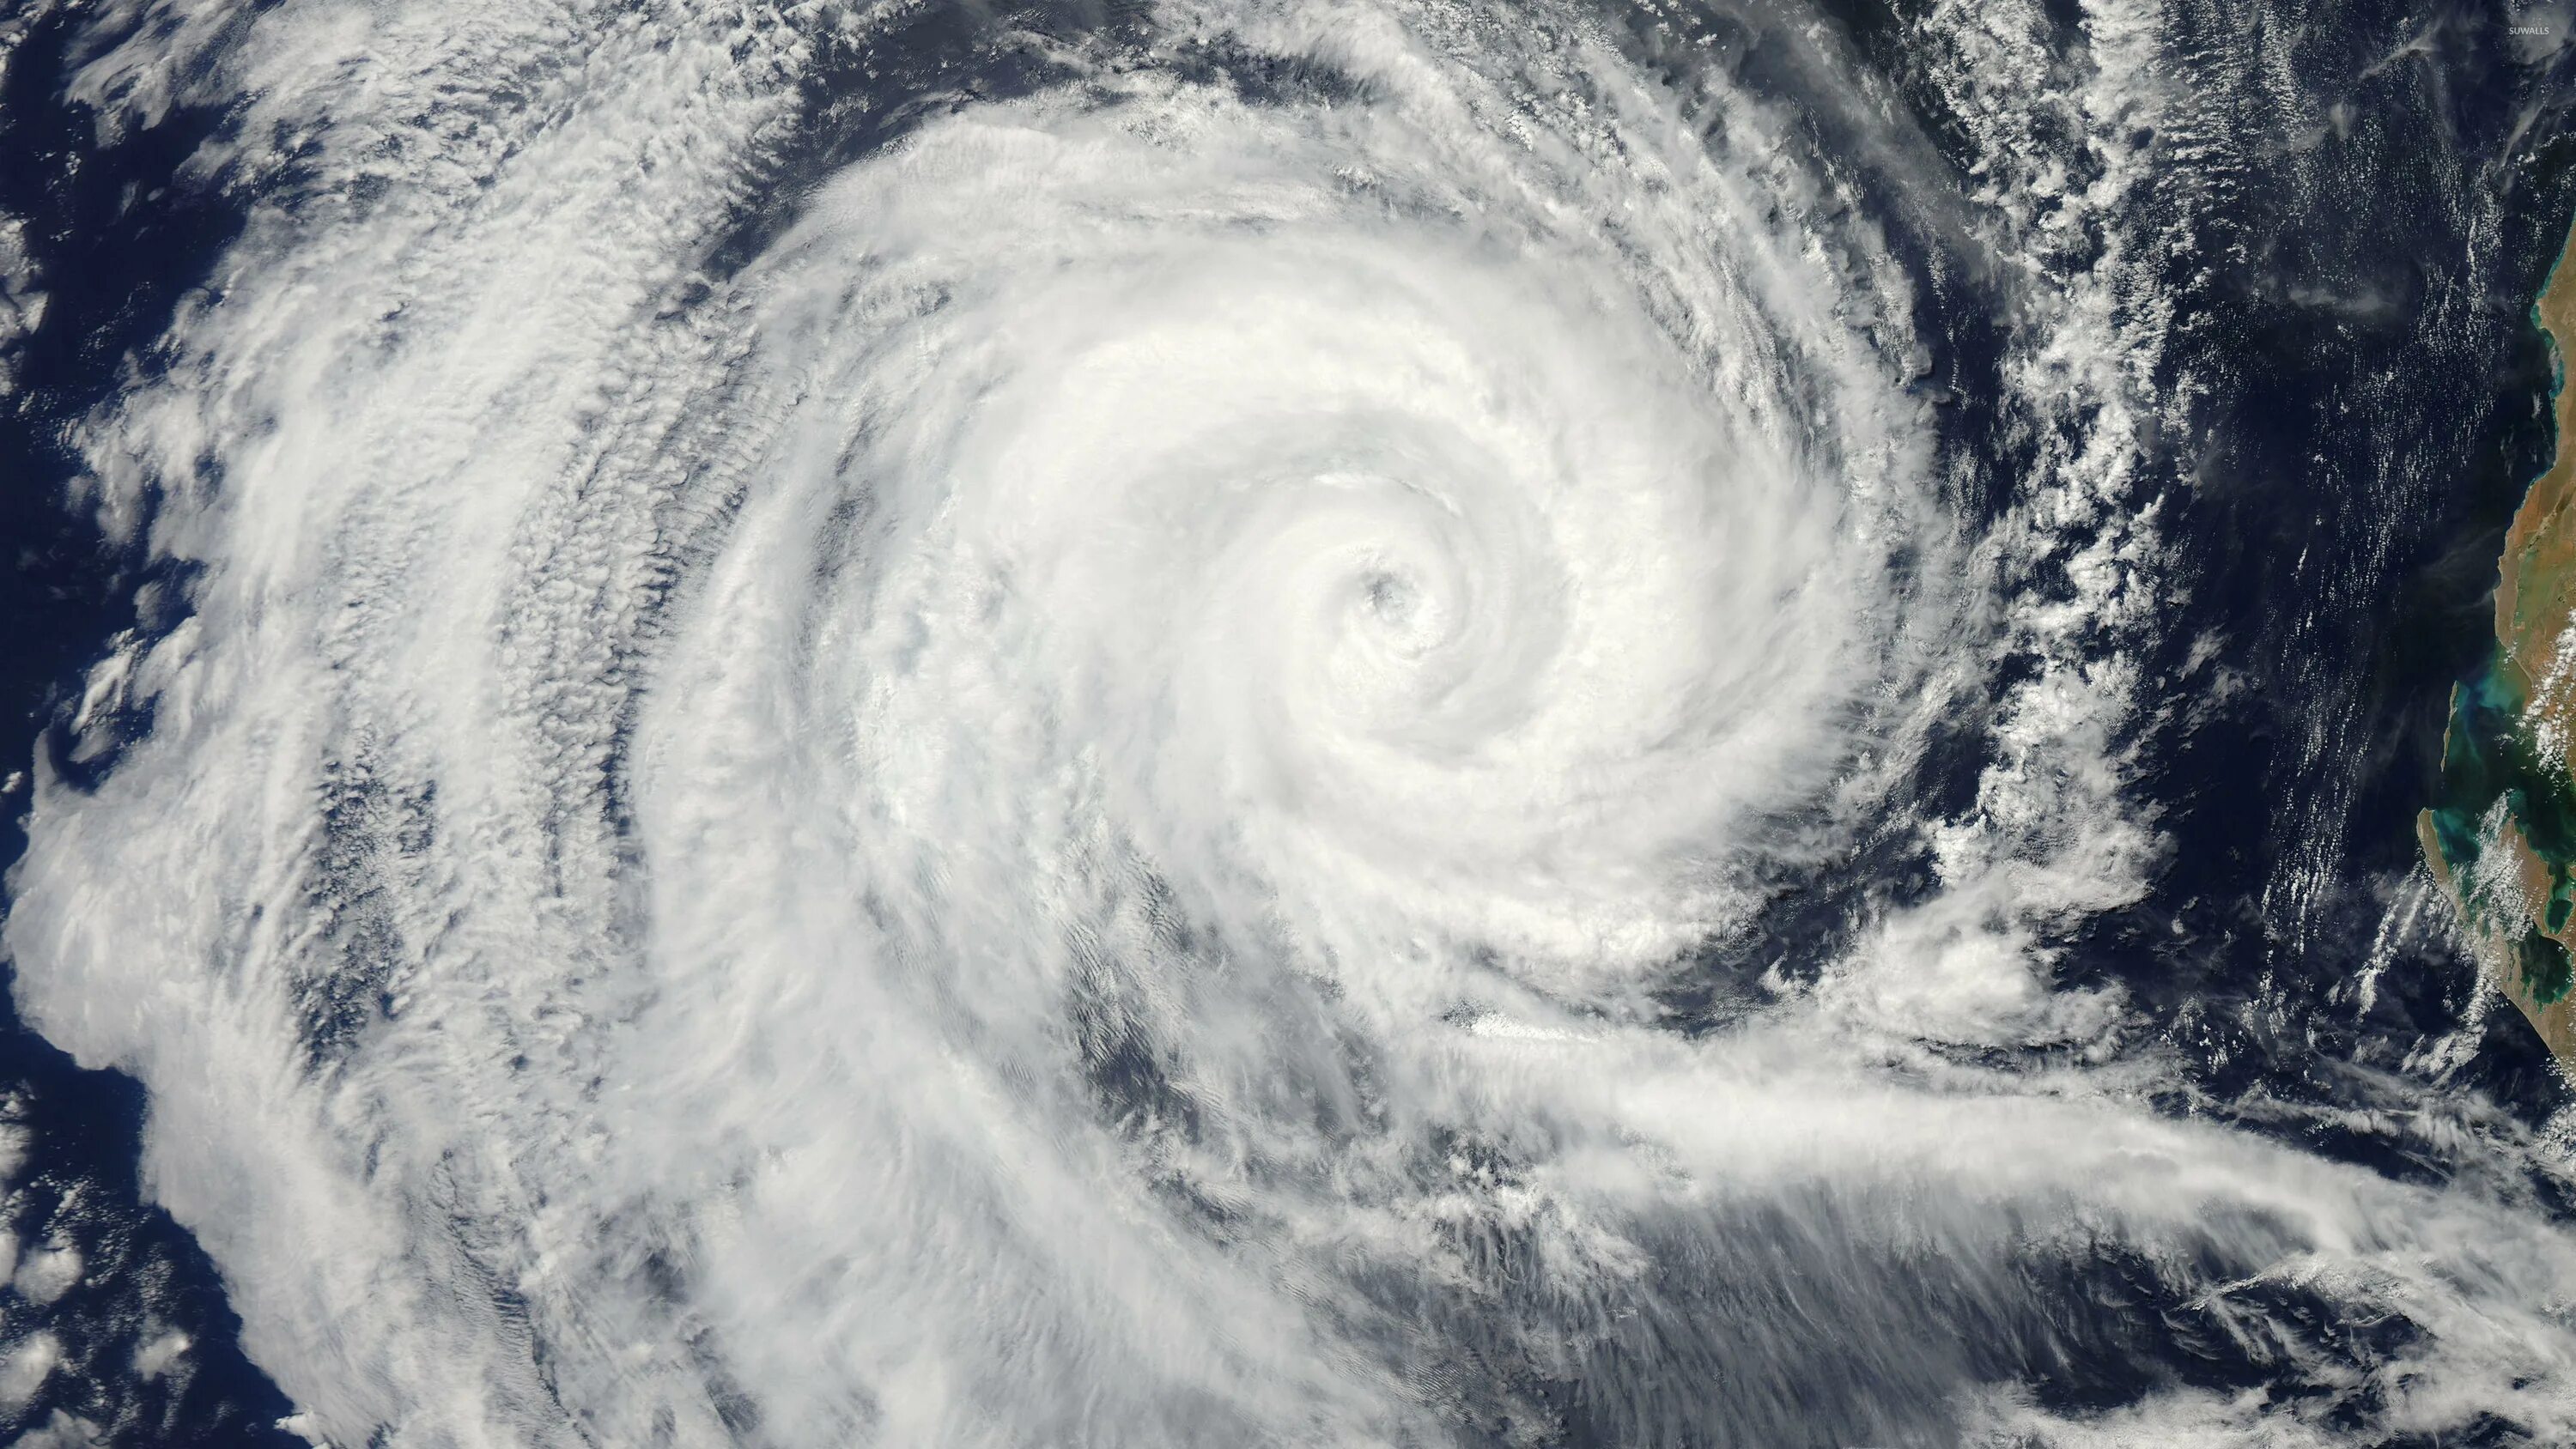 Tropical Cyclone. Циклон снимок из космоса. Антициклон с космоса. Ураган из космоса.